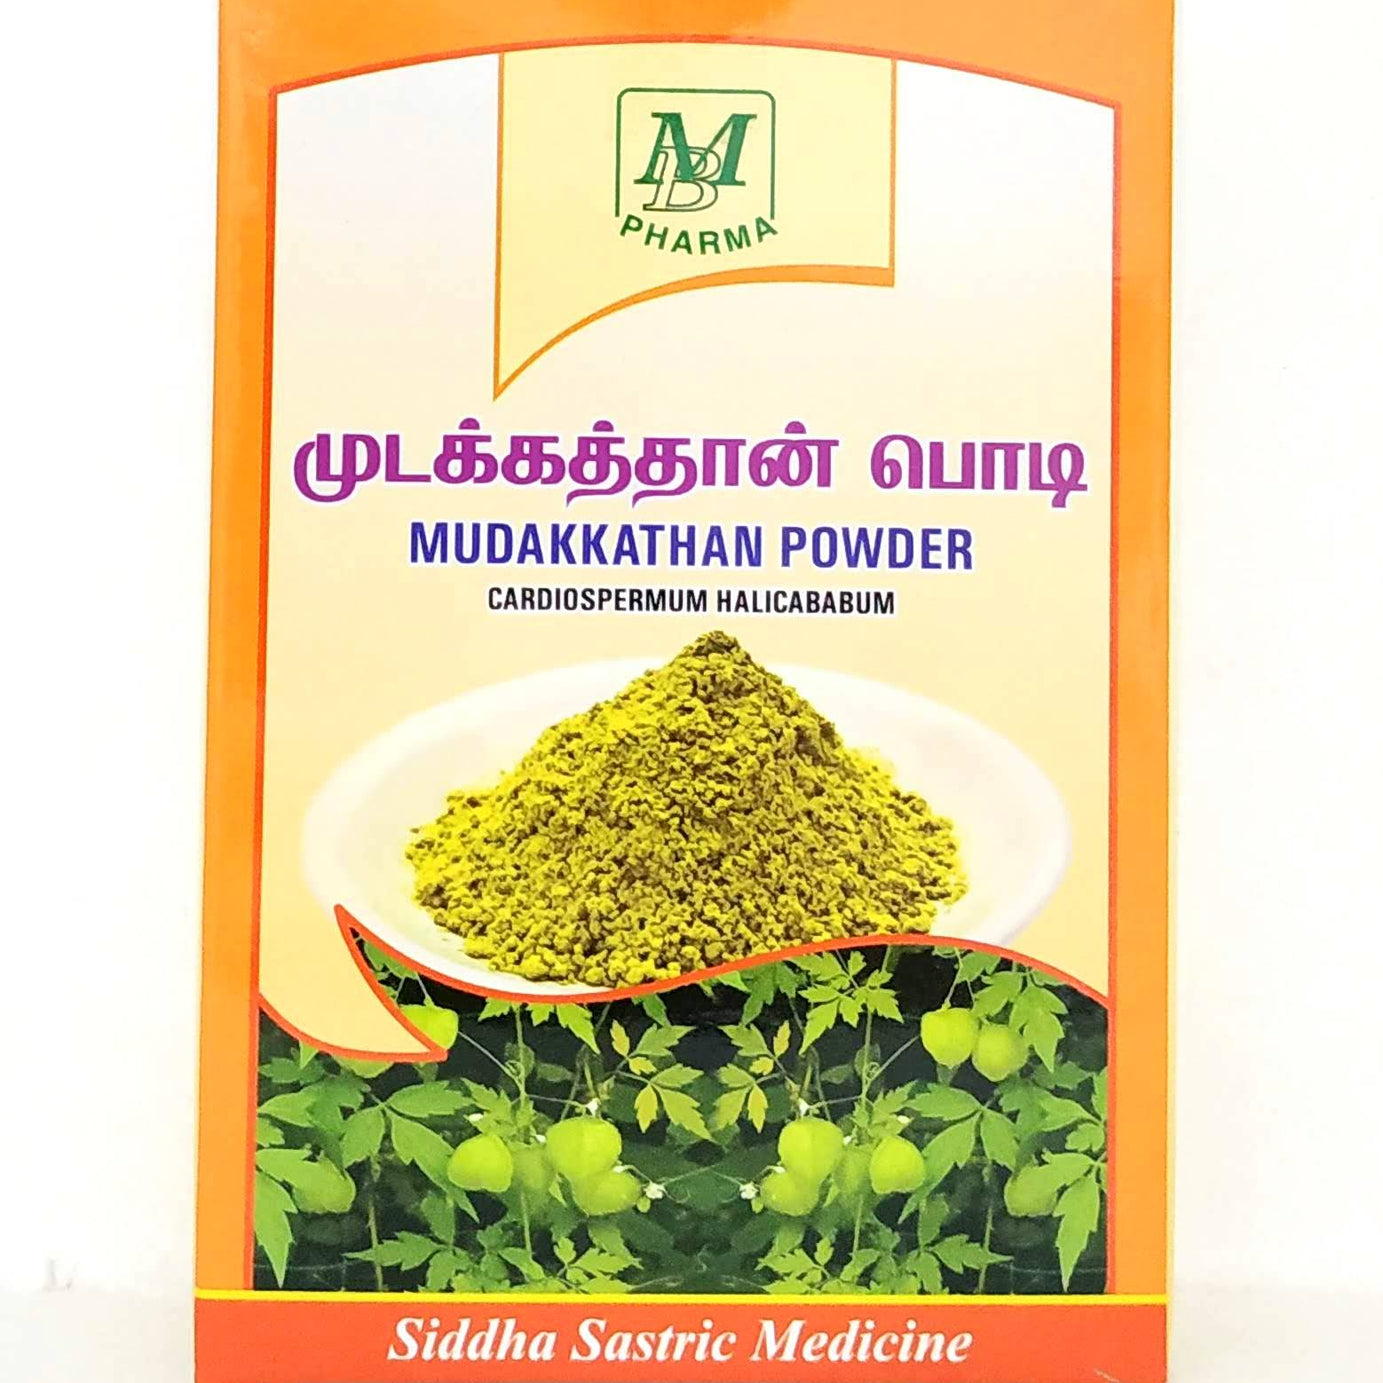 Shop Mudakkathan powder 50gm at price 36.00 from MB Pharma Online - Ayush Care